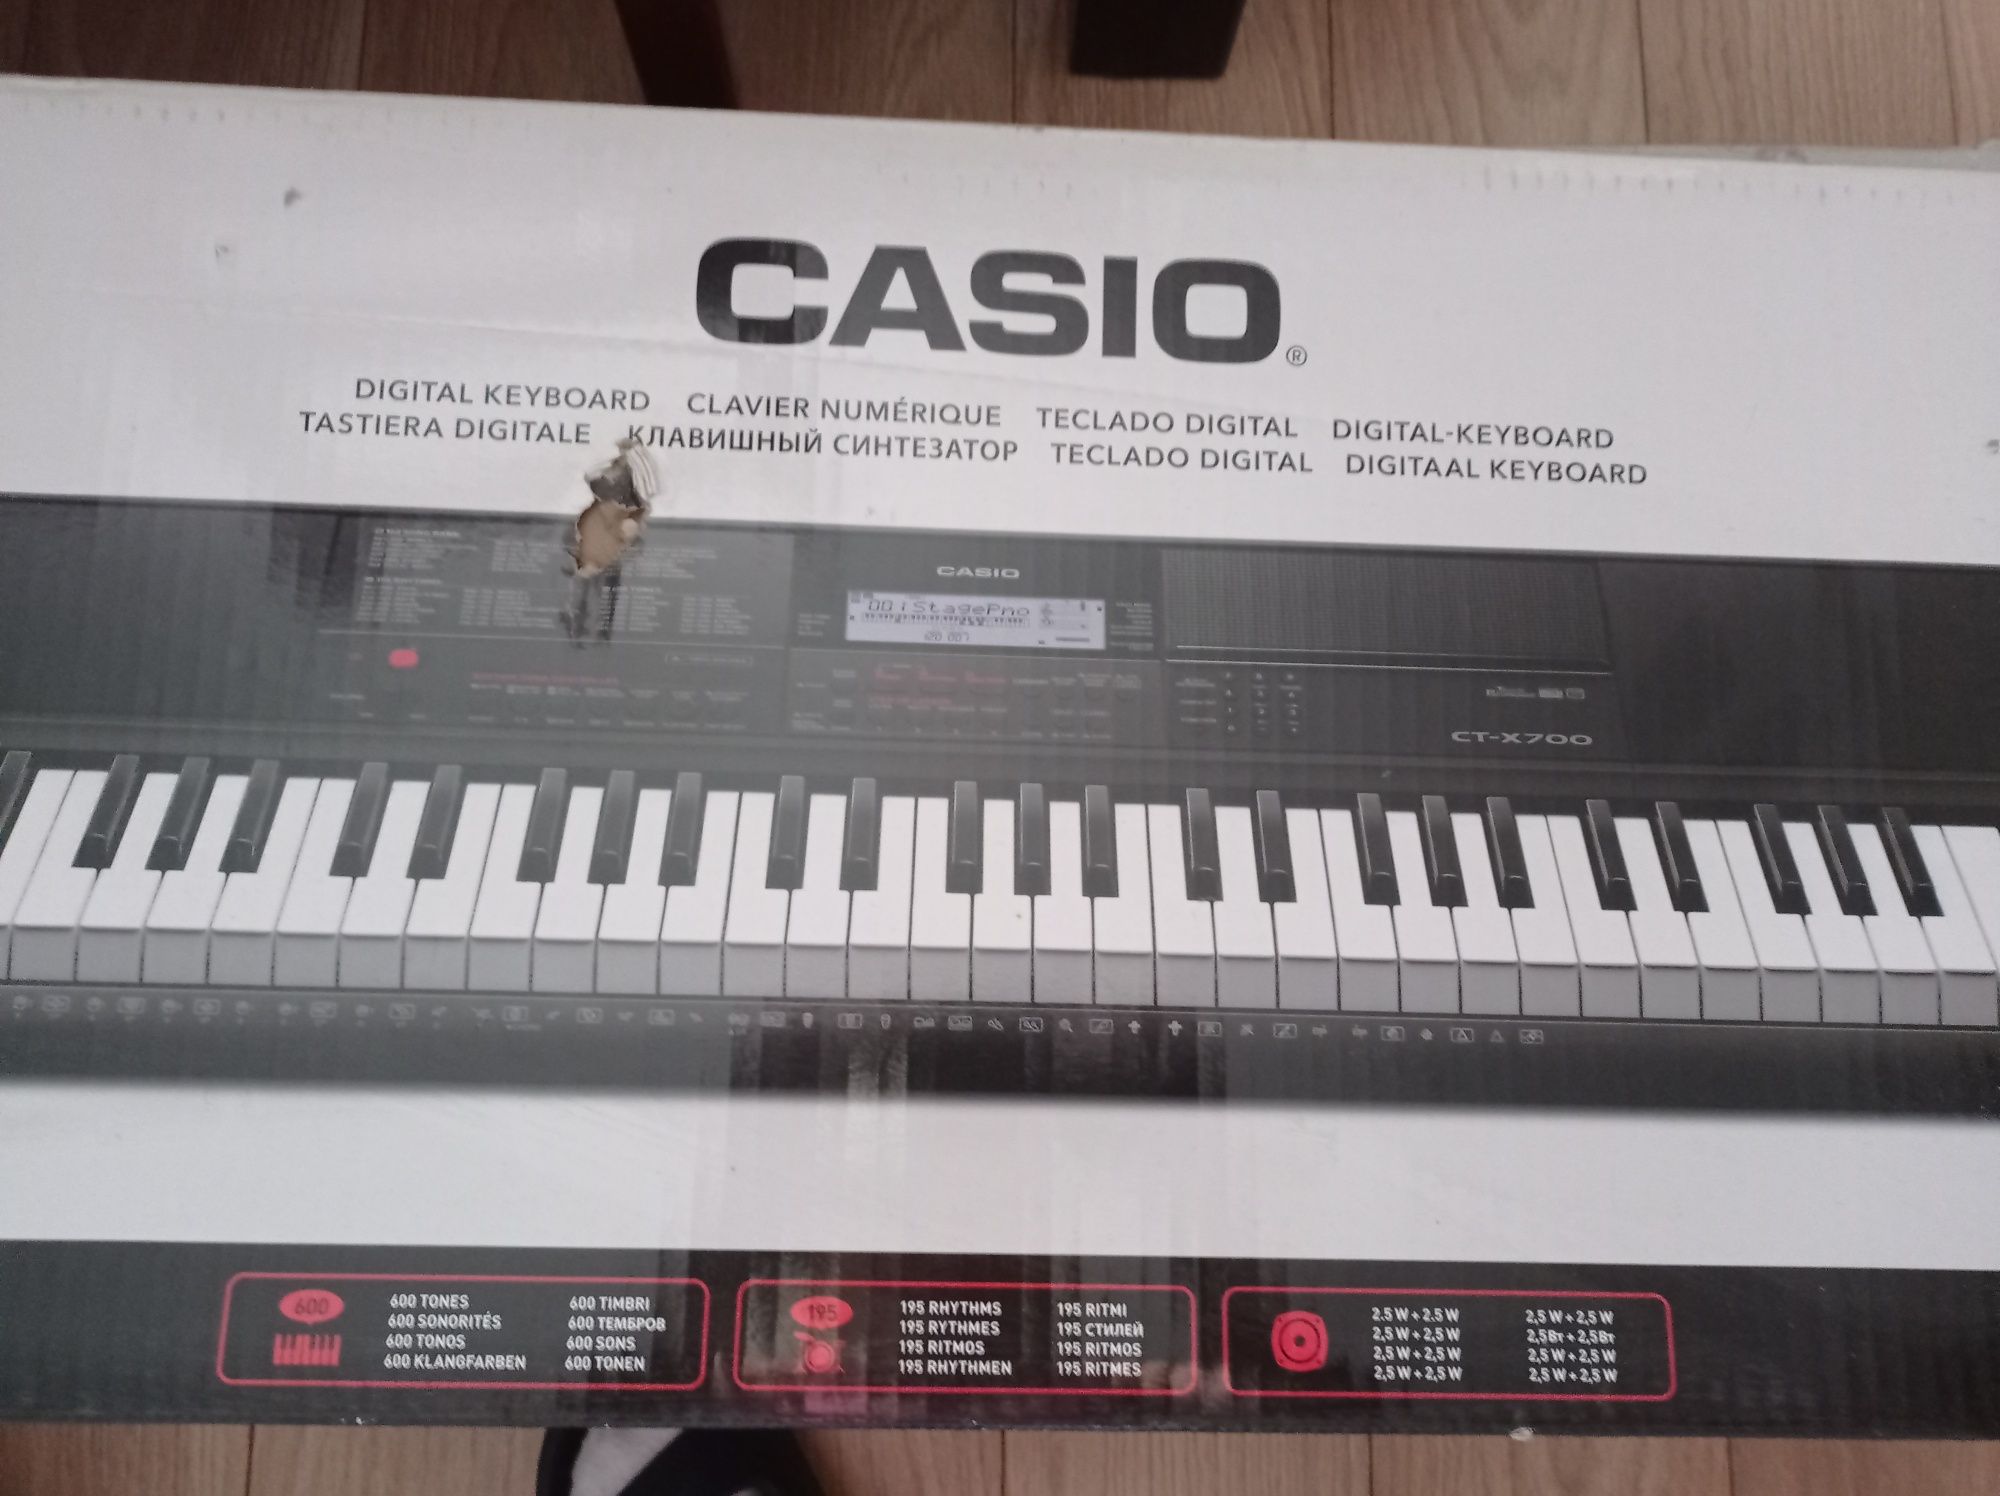 Keyboard casio cx-t700